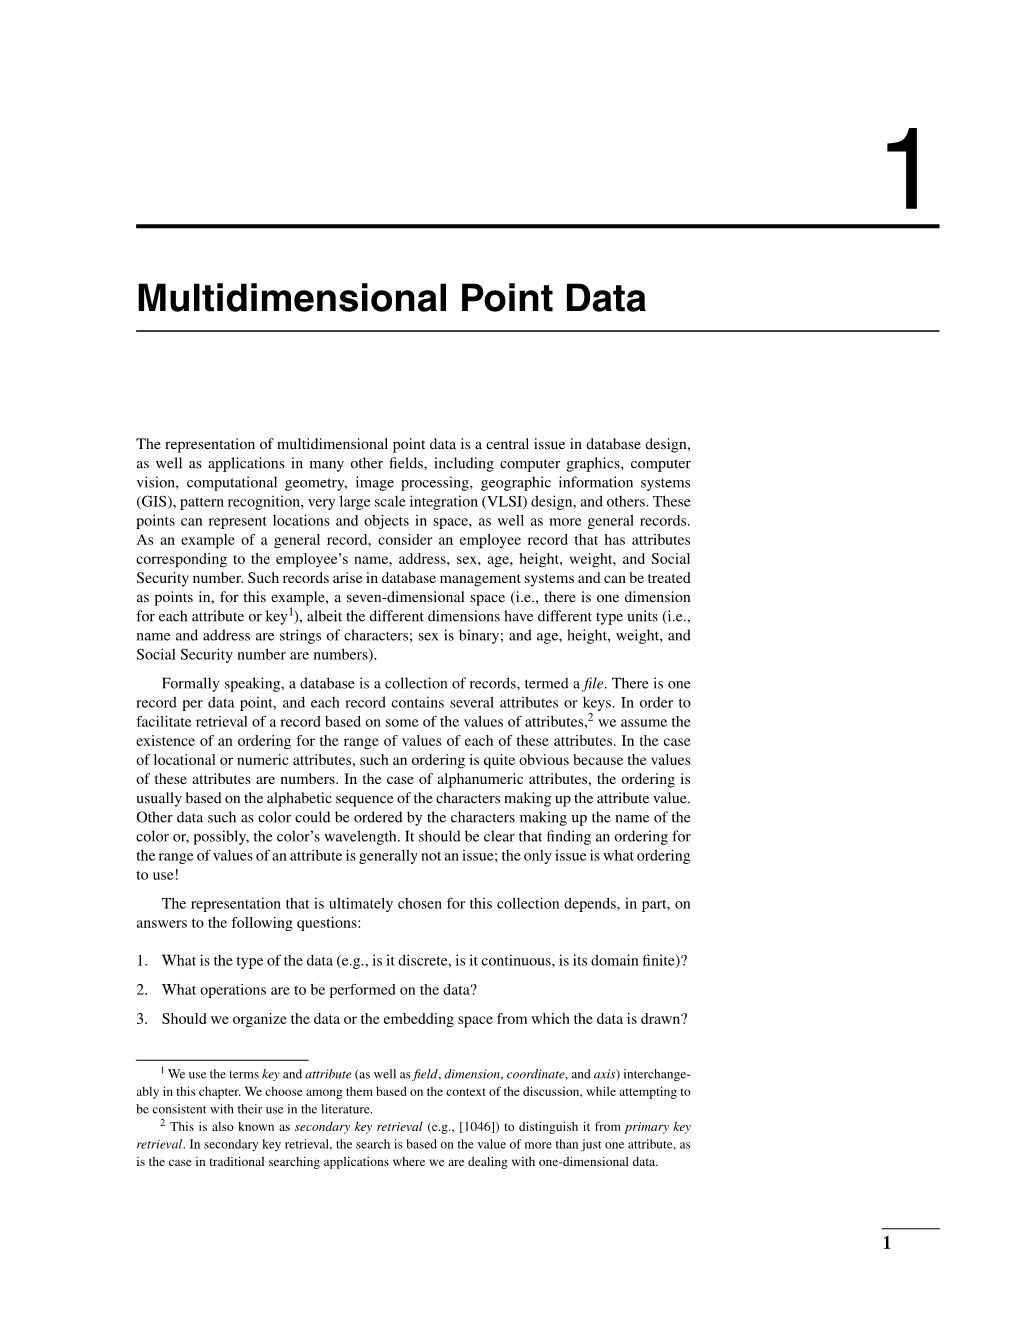 Multidimensional Point Data